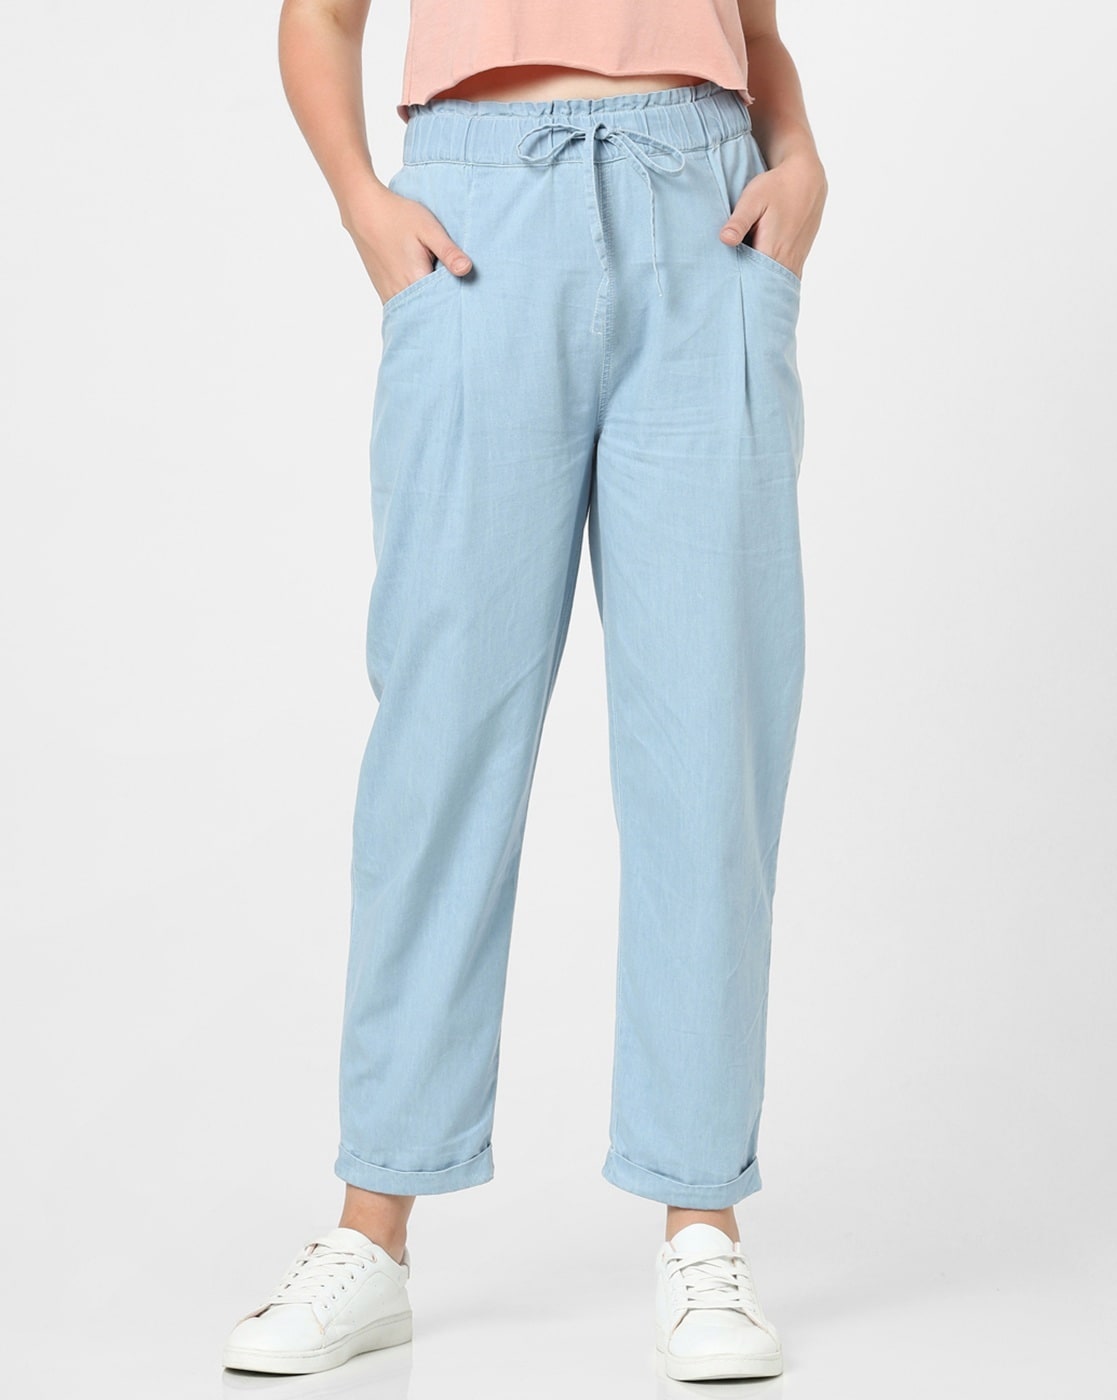 Buy Basic Editions women drawstring pants blue Online